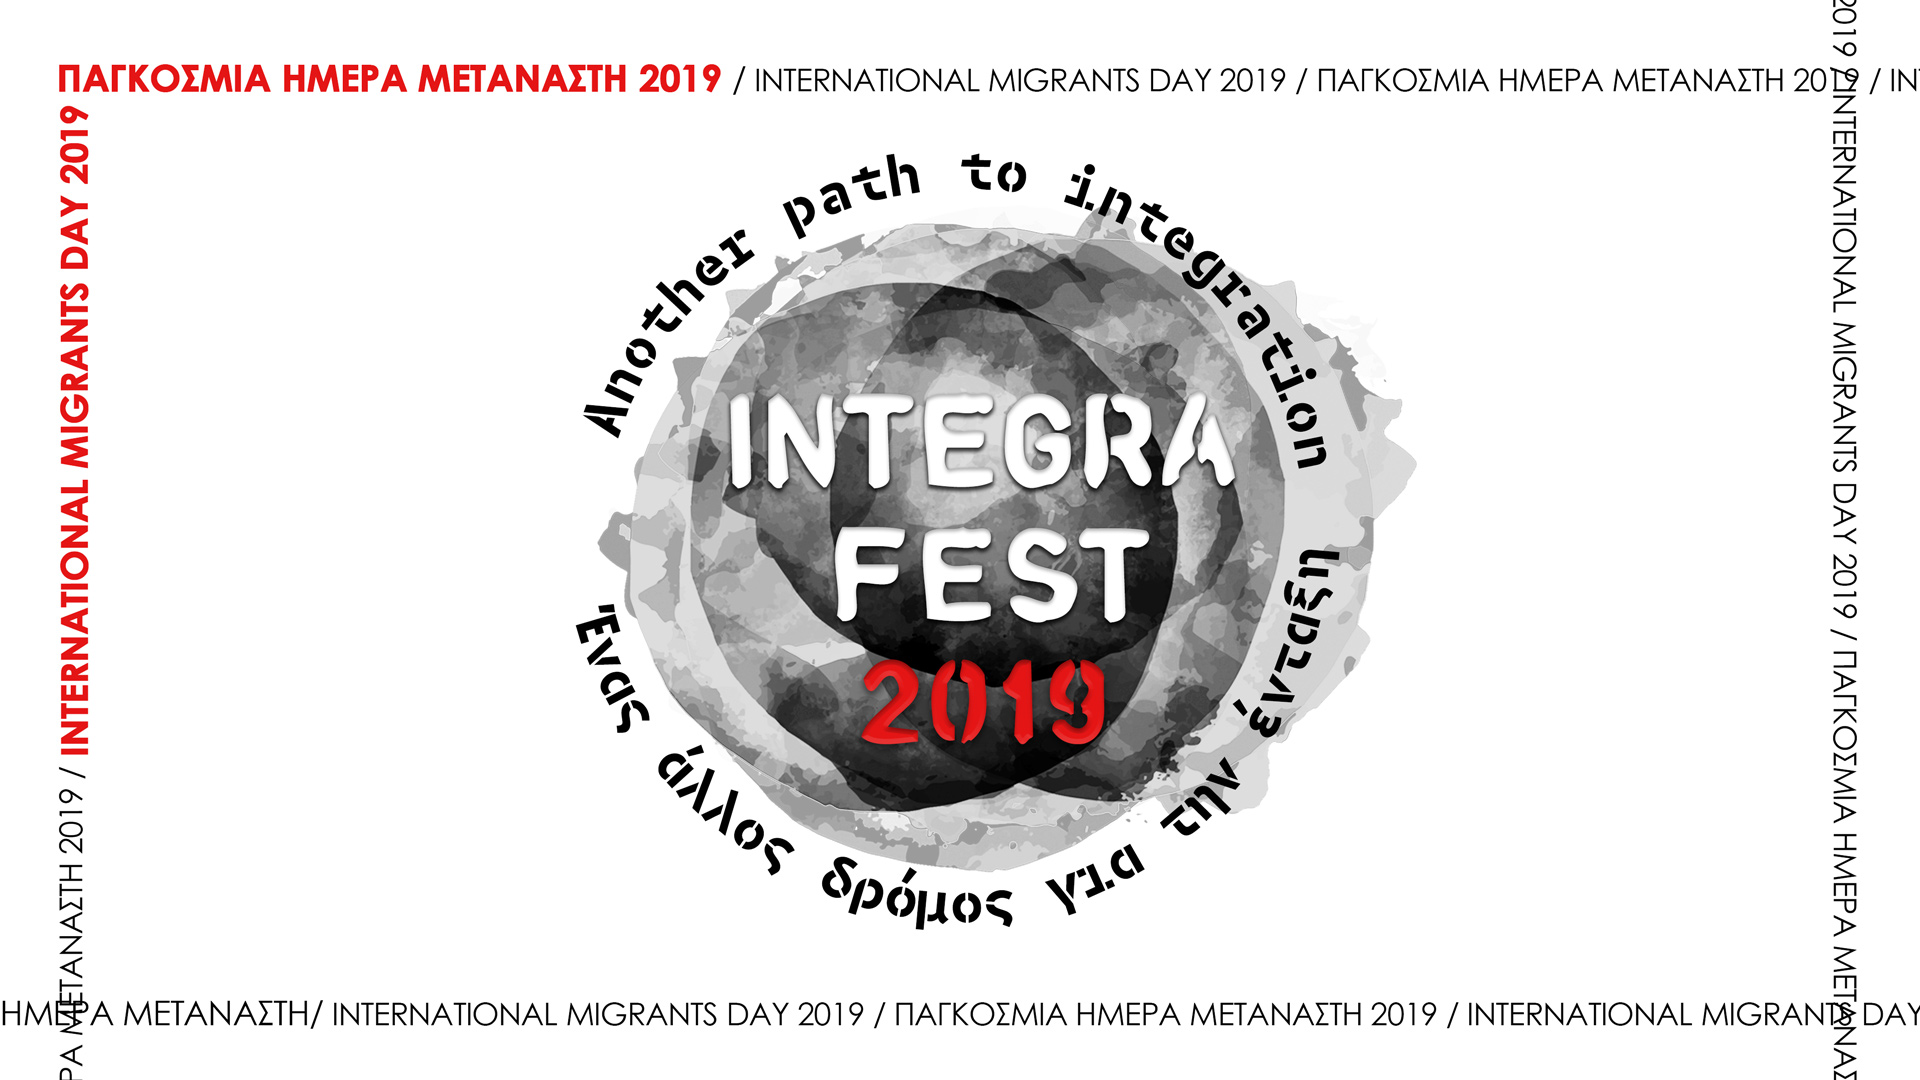 INTEGRA FEST 2019